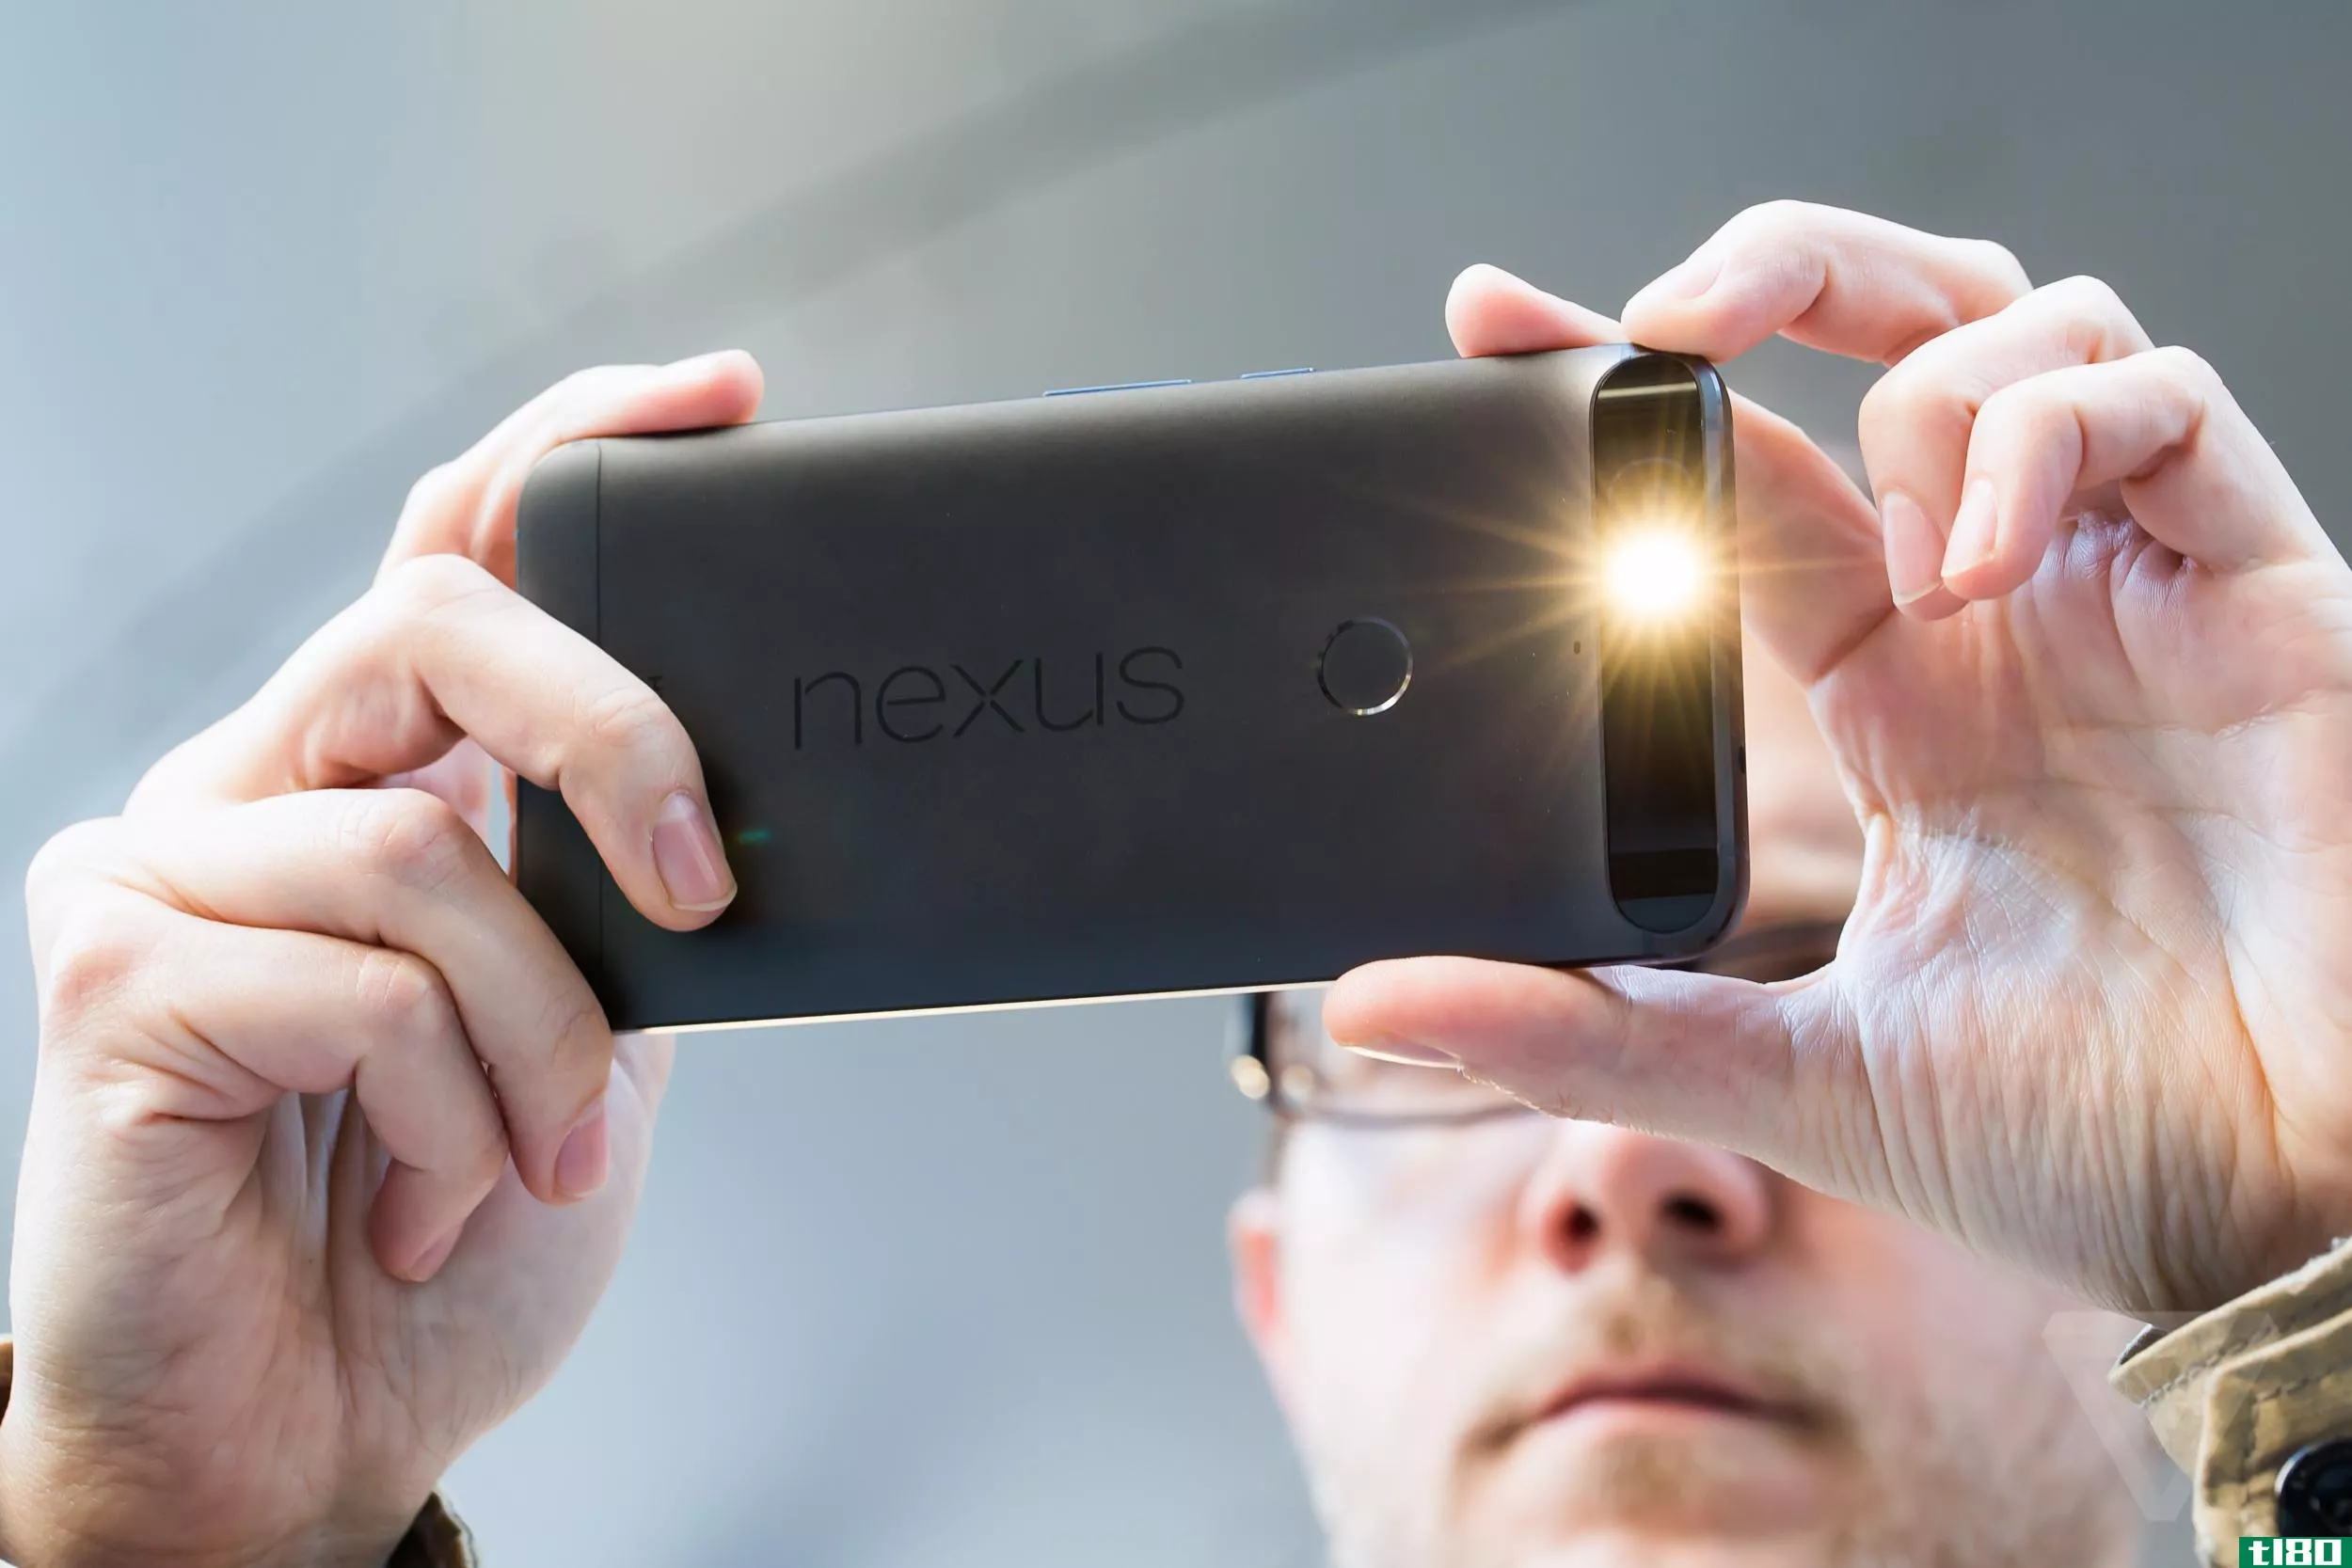 android更新将在下周为nexus手机带来新的表情符号